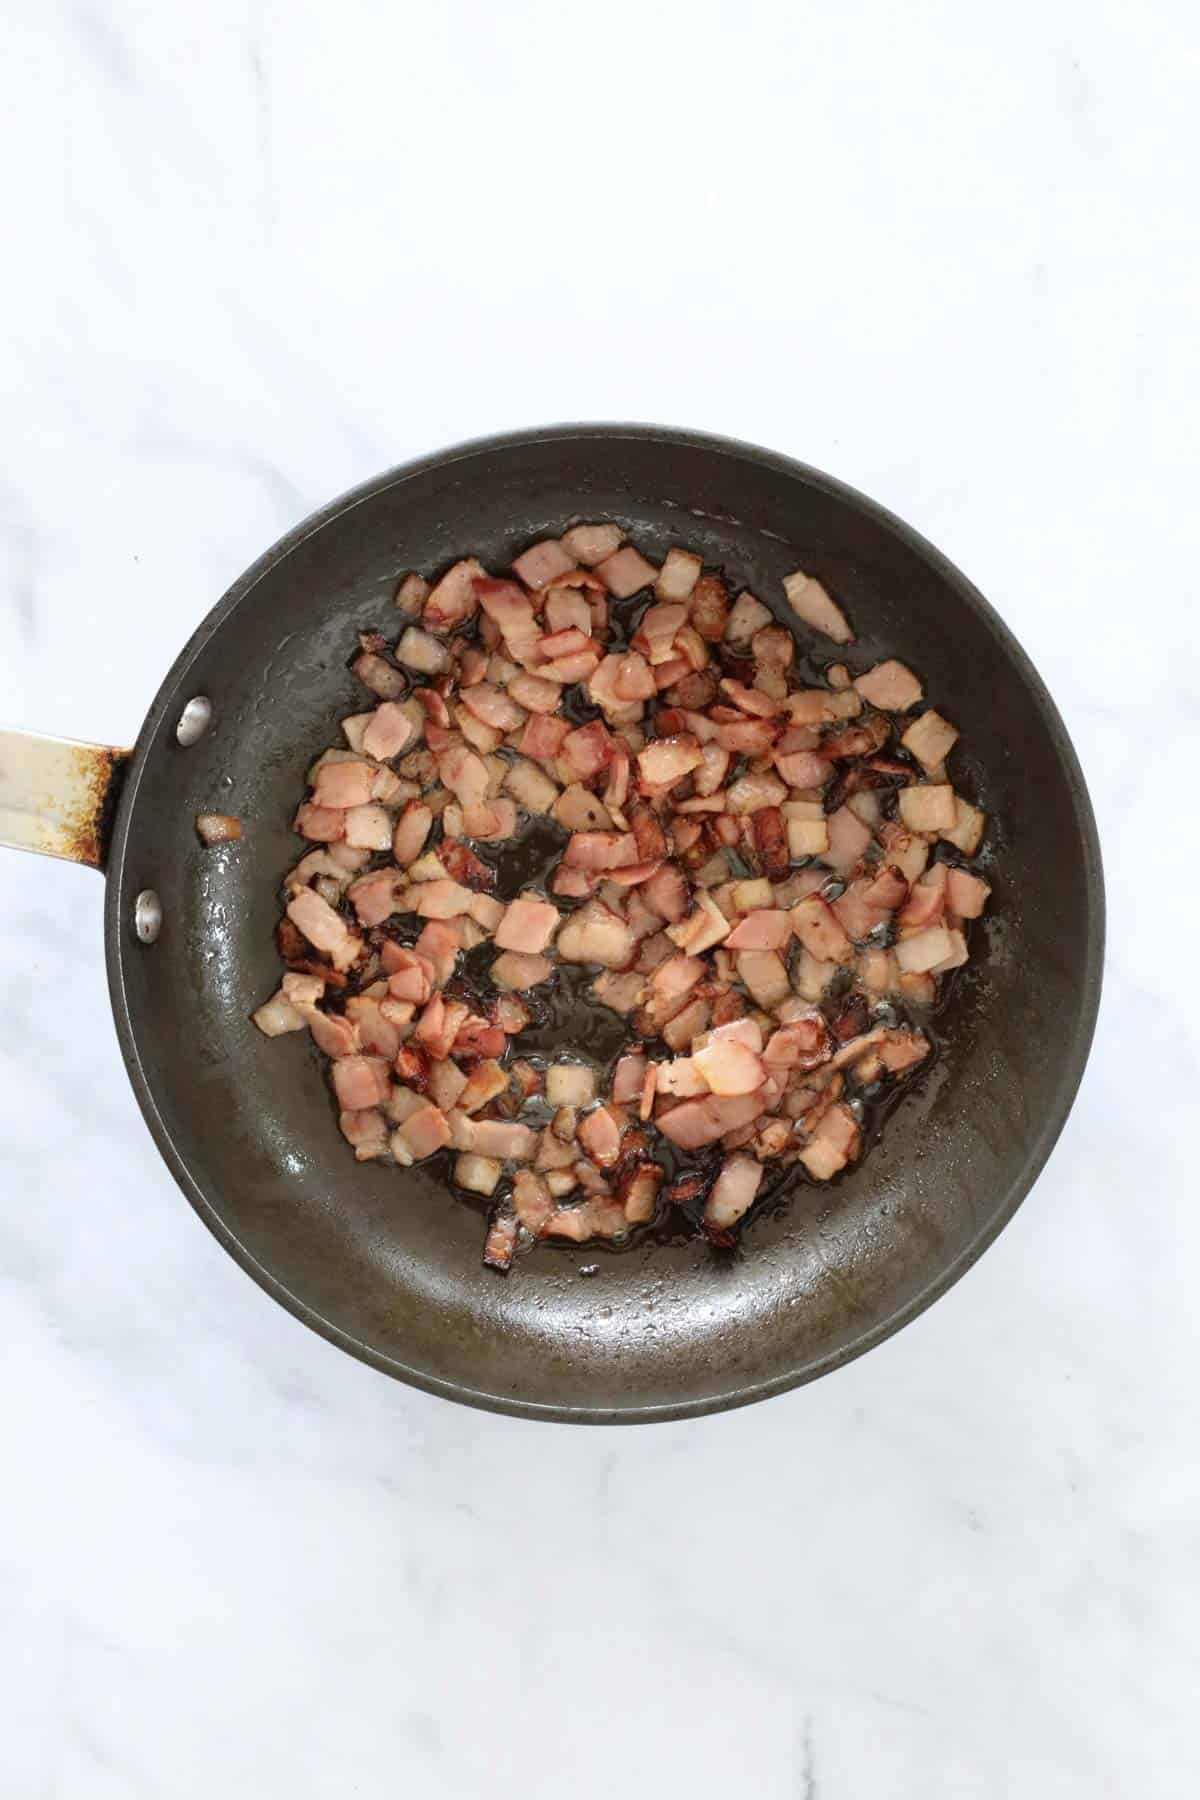 Diced crispy bacon in a frying pan.